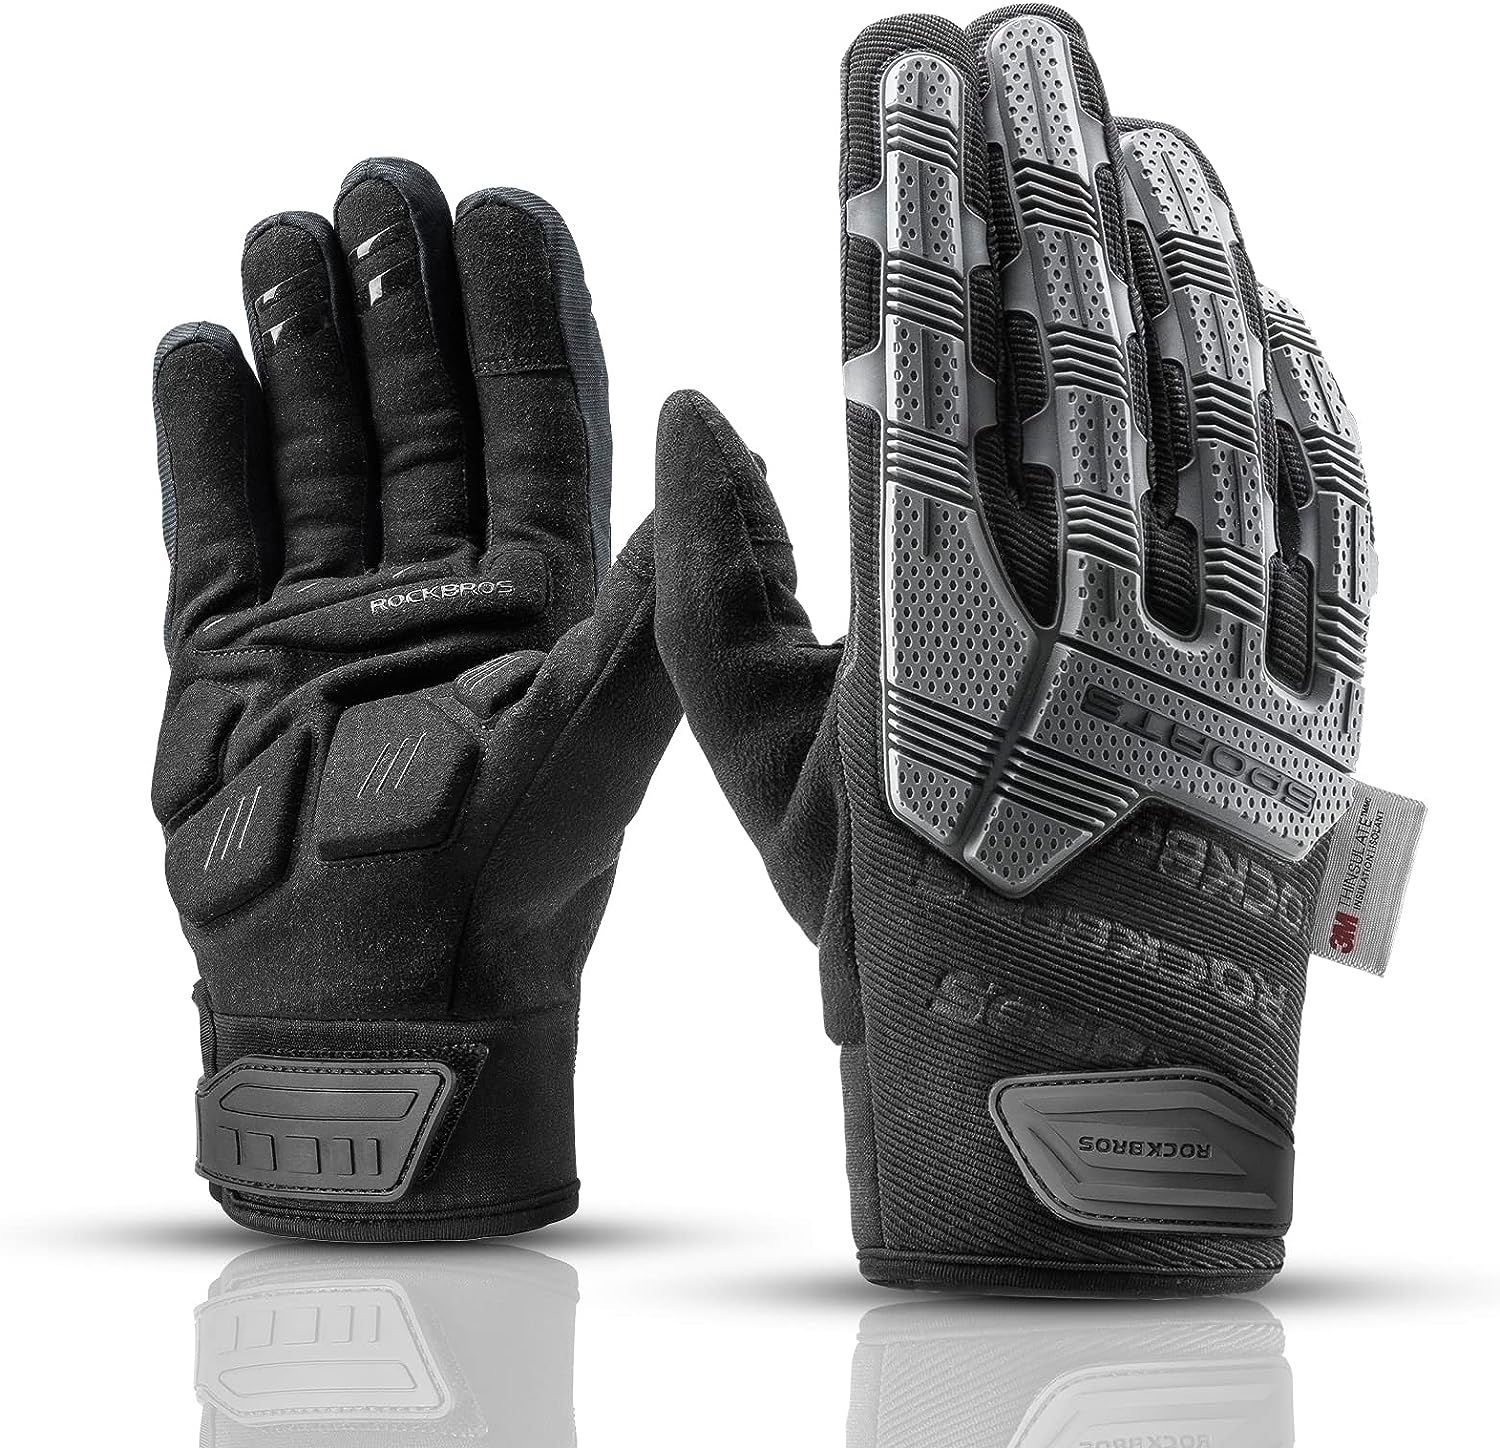 ROCKBROS Winter Motorcycle Bike Gloves for Men Women Touchscreen Thermal